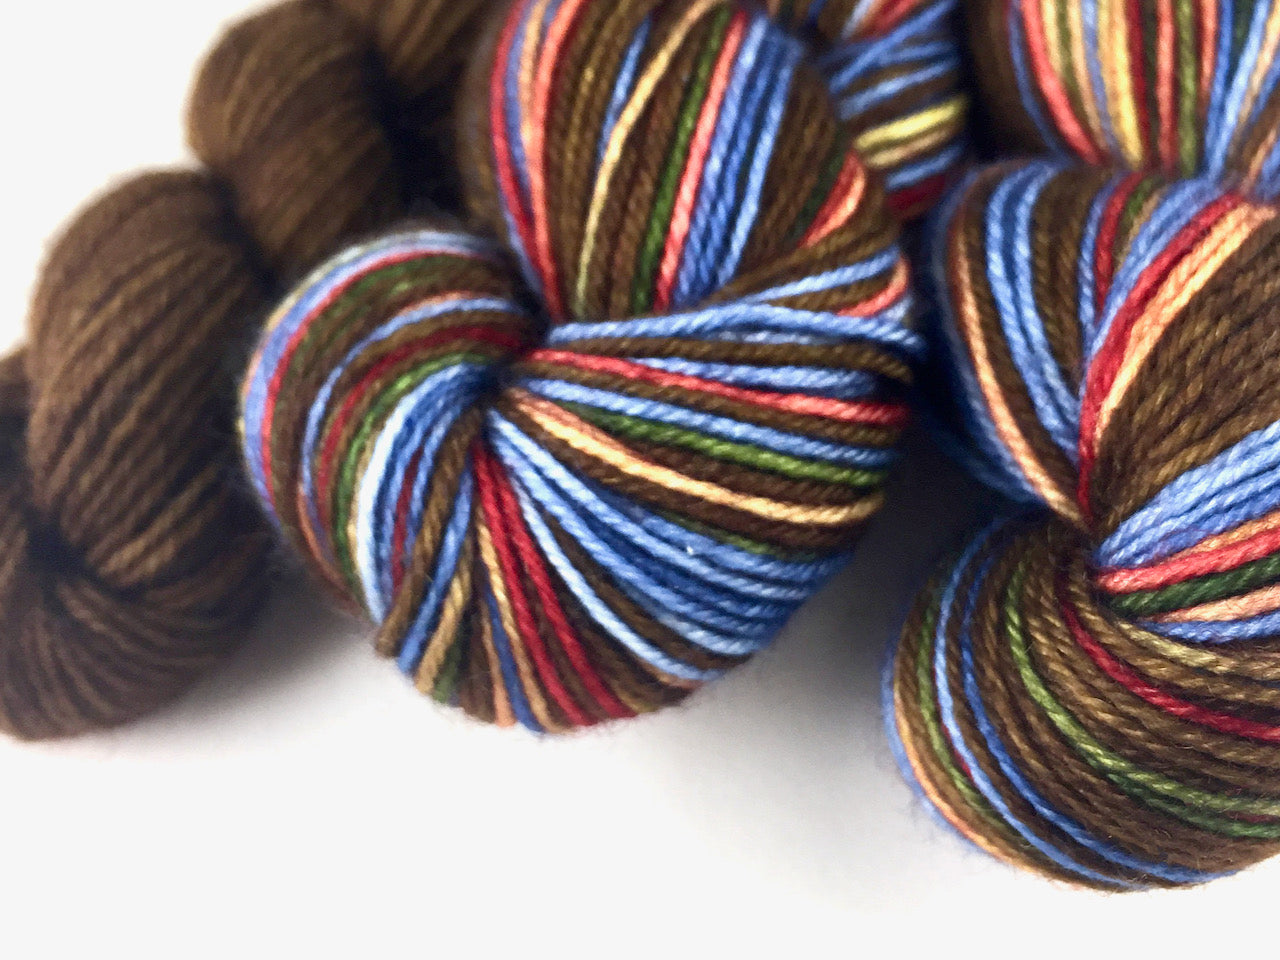 Gatineau fall self-striping sock yarn